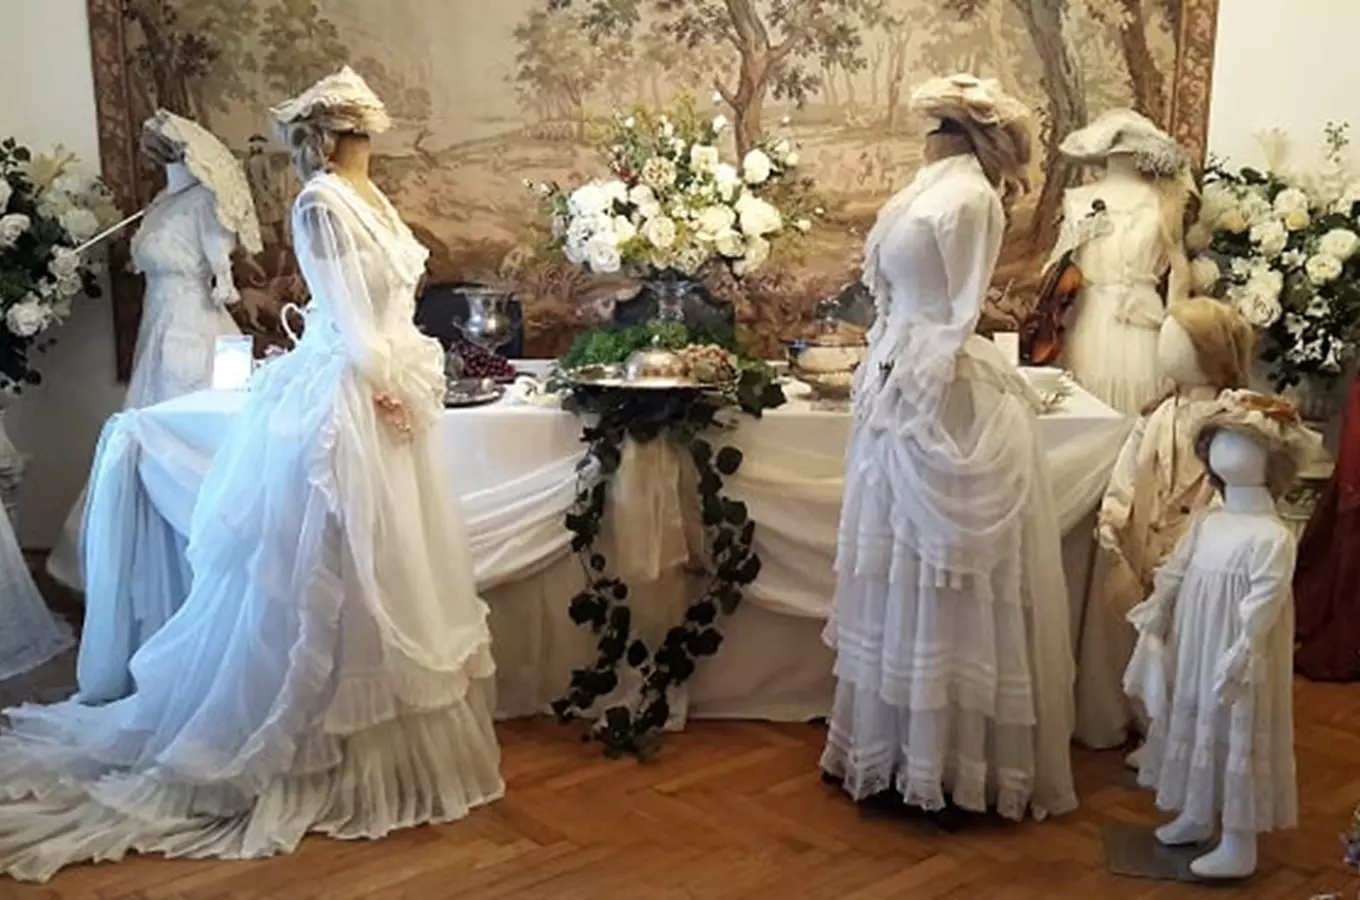 Muzeum Kouzlo starých časů – oděvy a doplňky z let 1850-1920